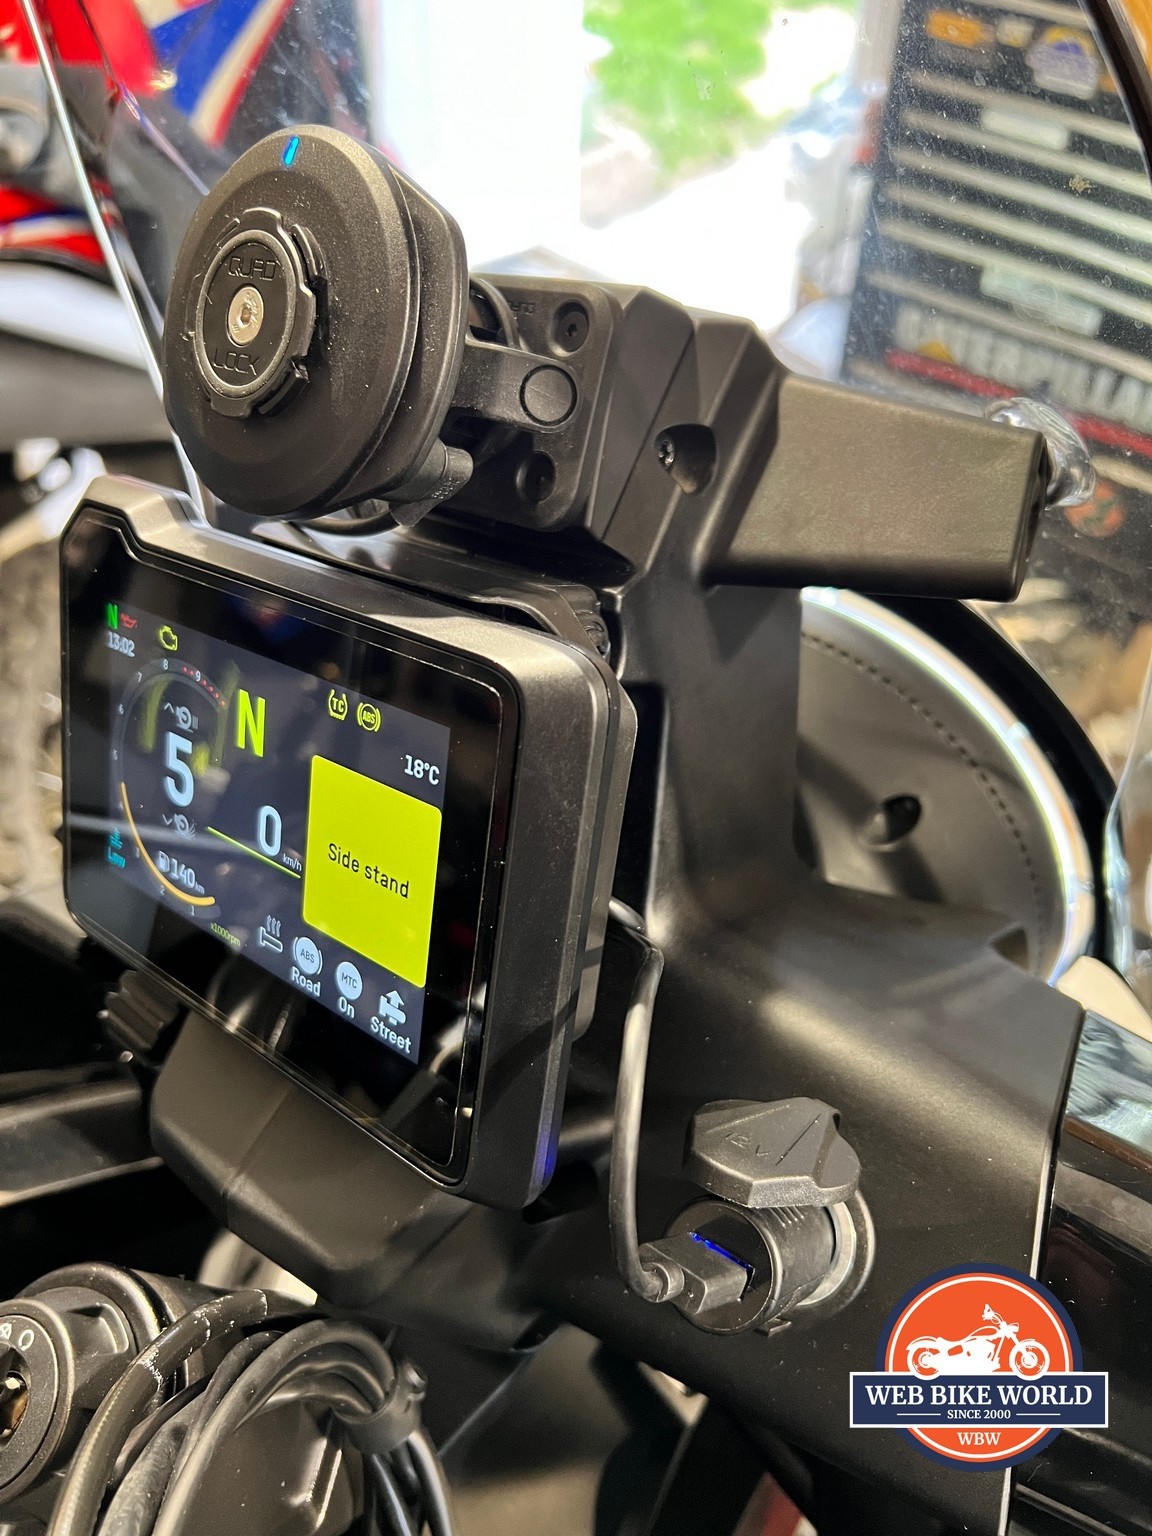 Quadlock Waterproof 12V to USB Smart Adaptor install on a Triumph Street  Triple RS Motorcycle 